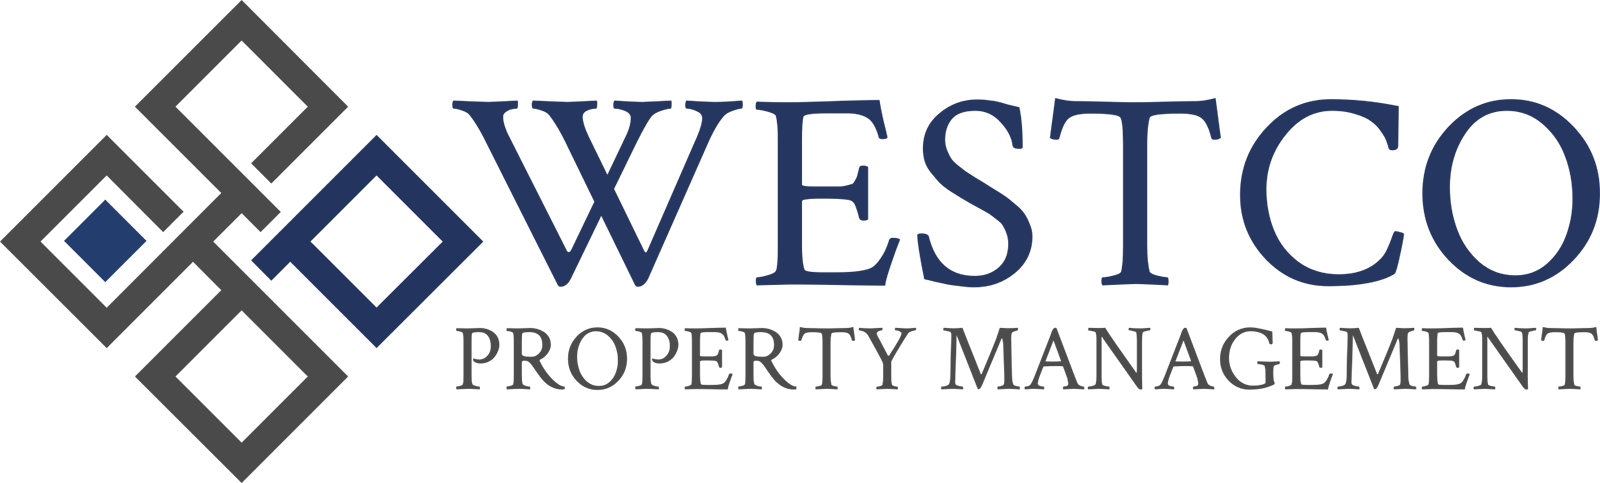 Westco Property Management